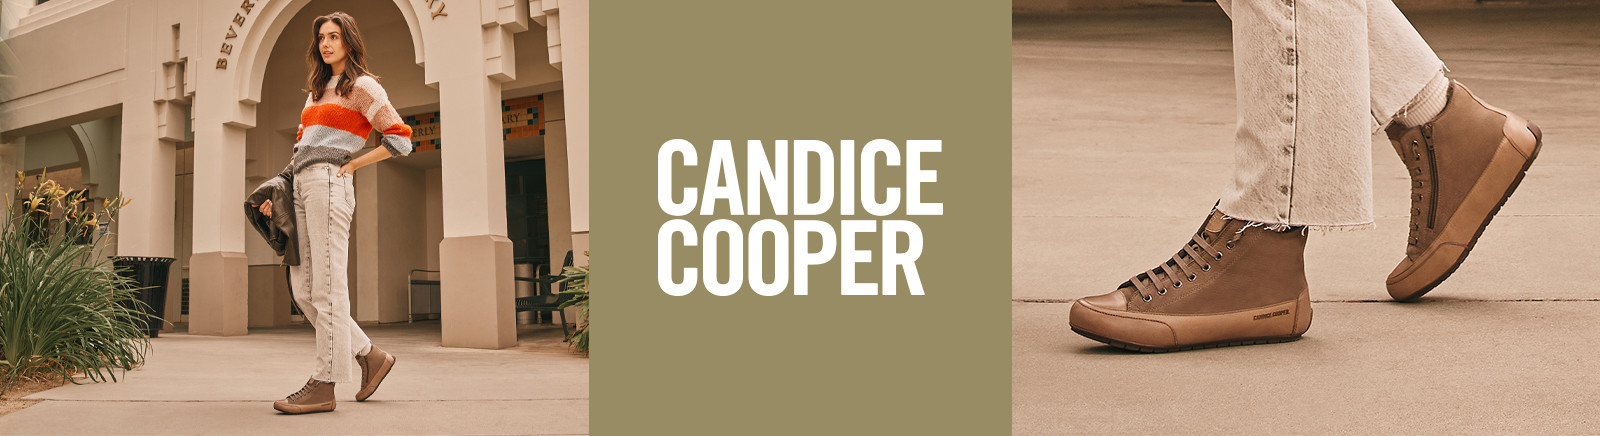 Prange: Candice Cooper Halbschuhe für Herren online shoppen